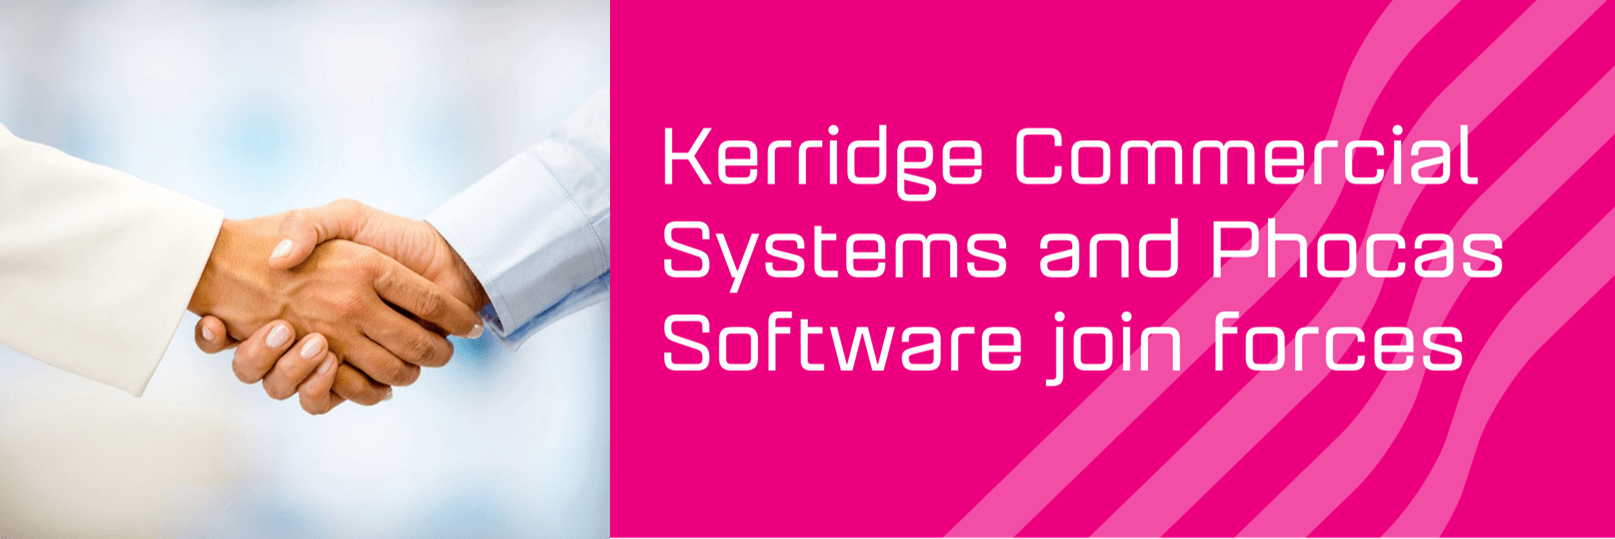 Kerridge CS and Phocas Software join forces